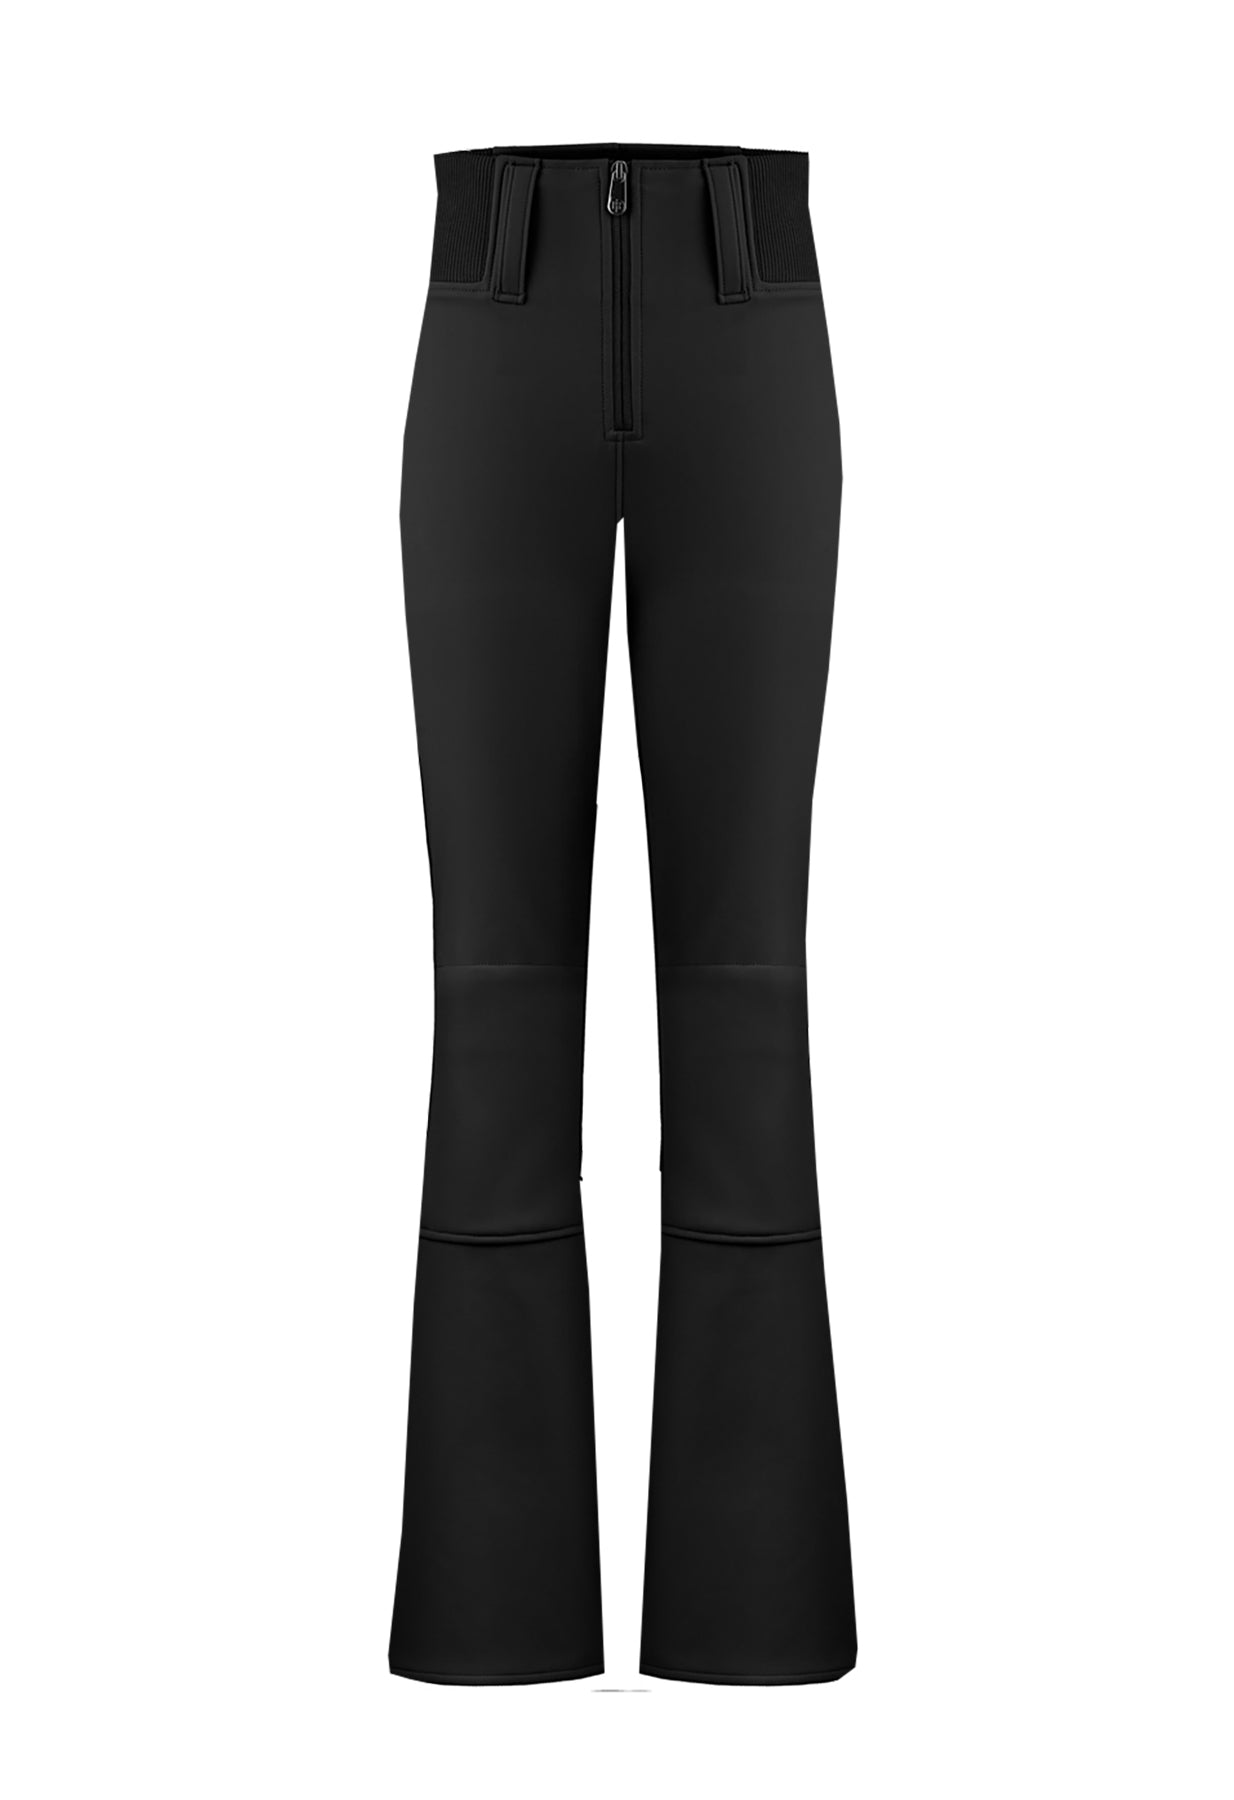 Poivre Blanc Short Length Softshell Ski Pant in Black W23-1121